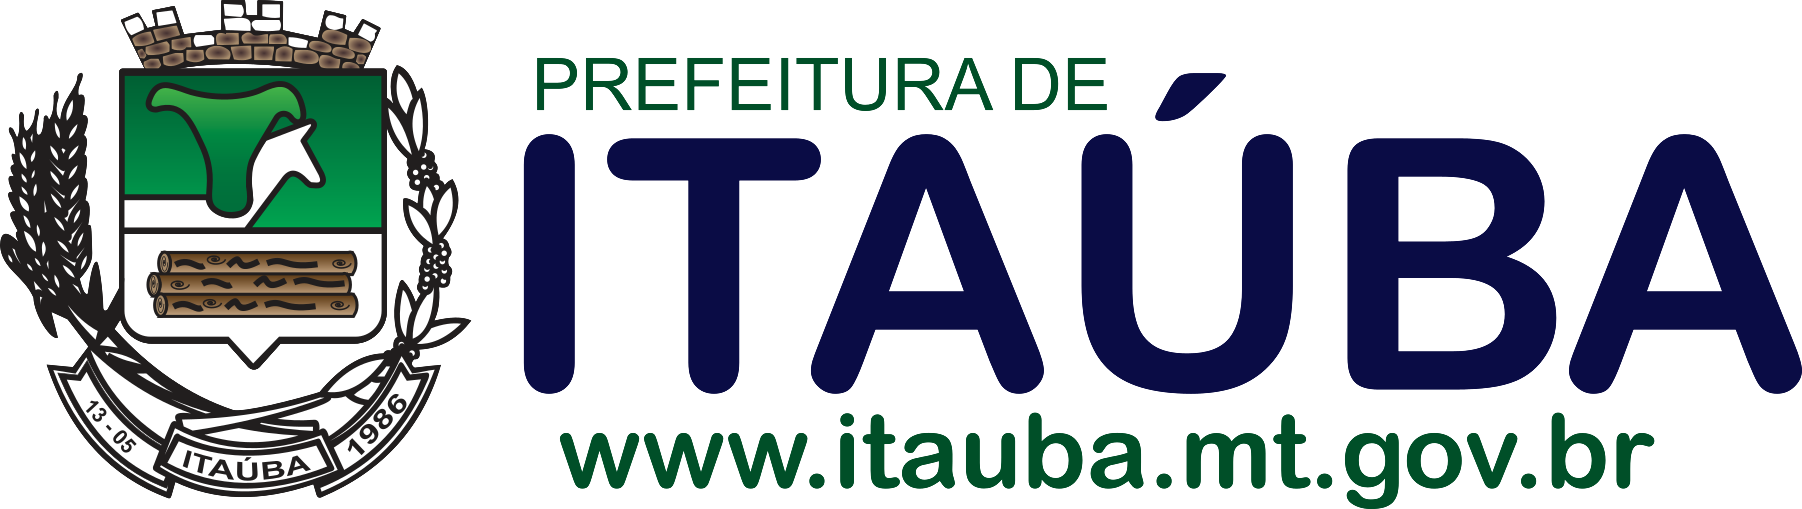 Logo daPrefeitura de Itaúba - MT